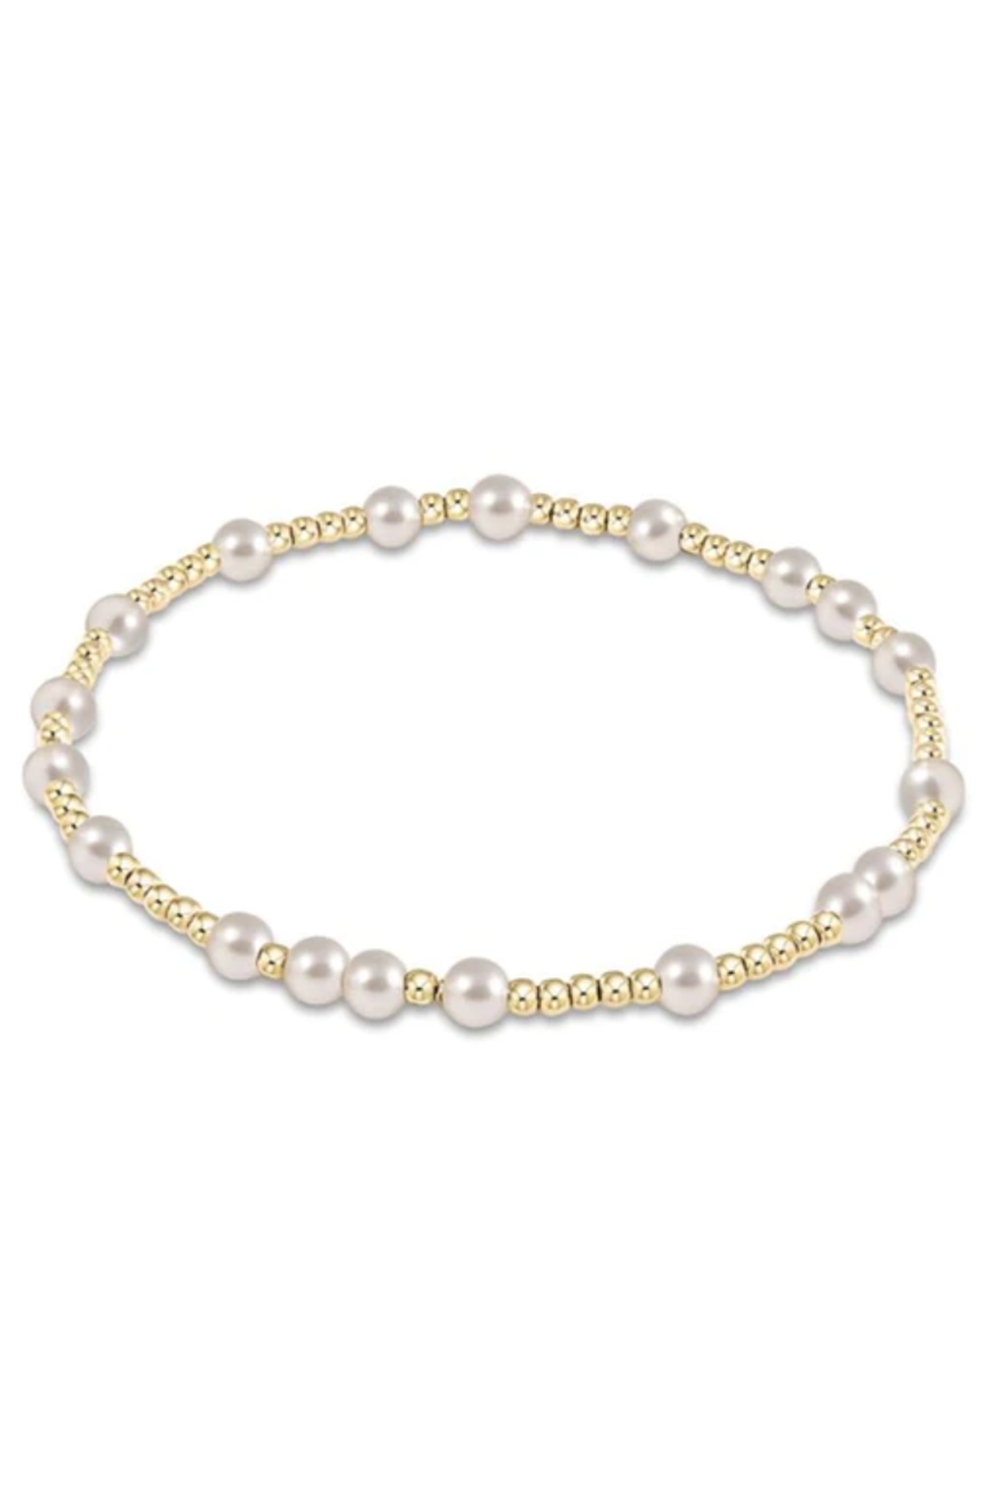 EN Hope Bracelet - Gold + Pearl